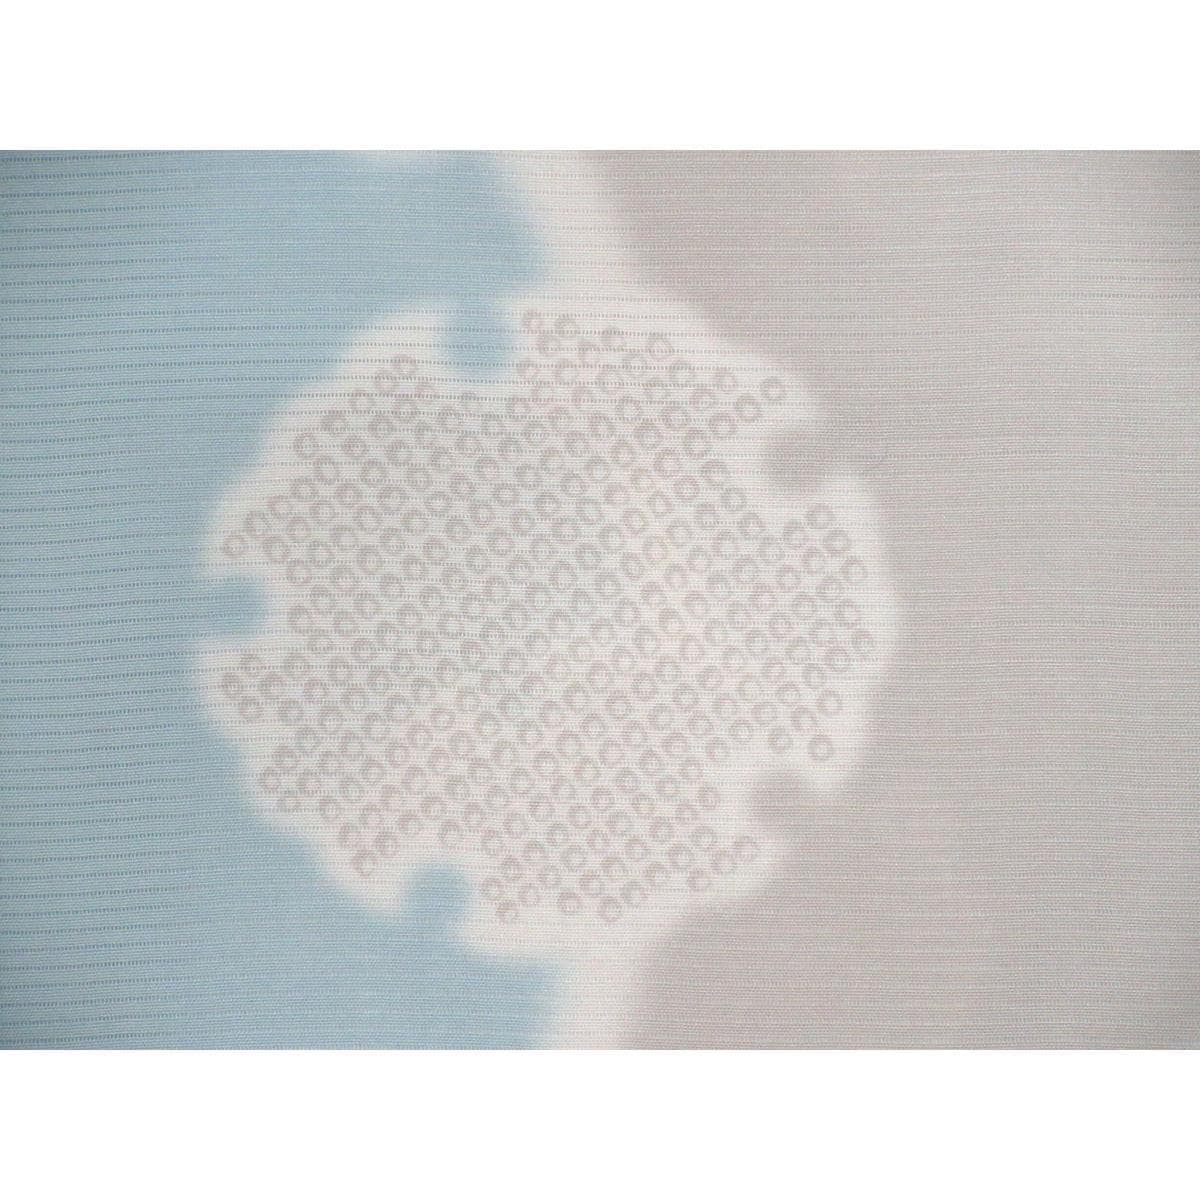 [Unused items] Single garment, small pattern of silk weave